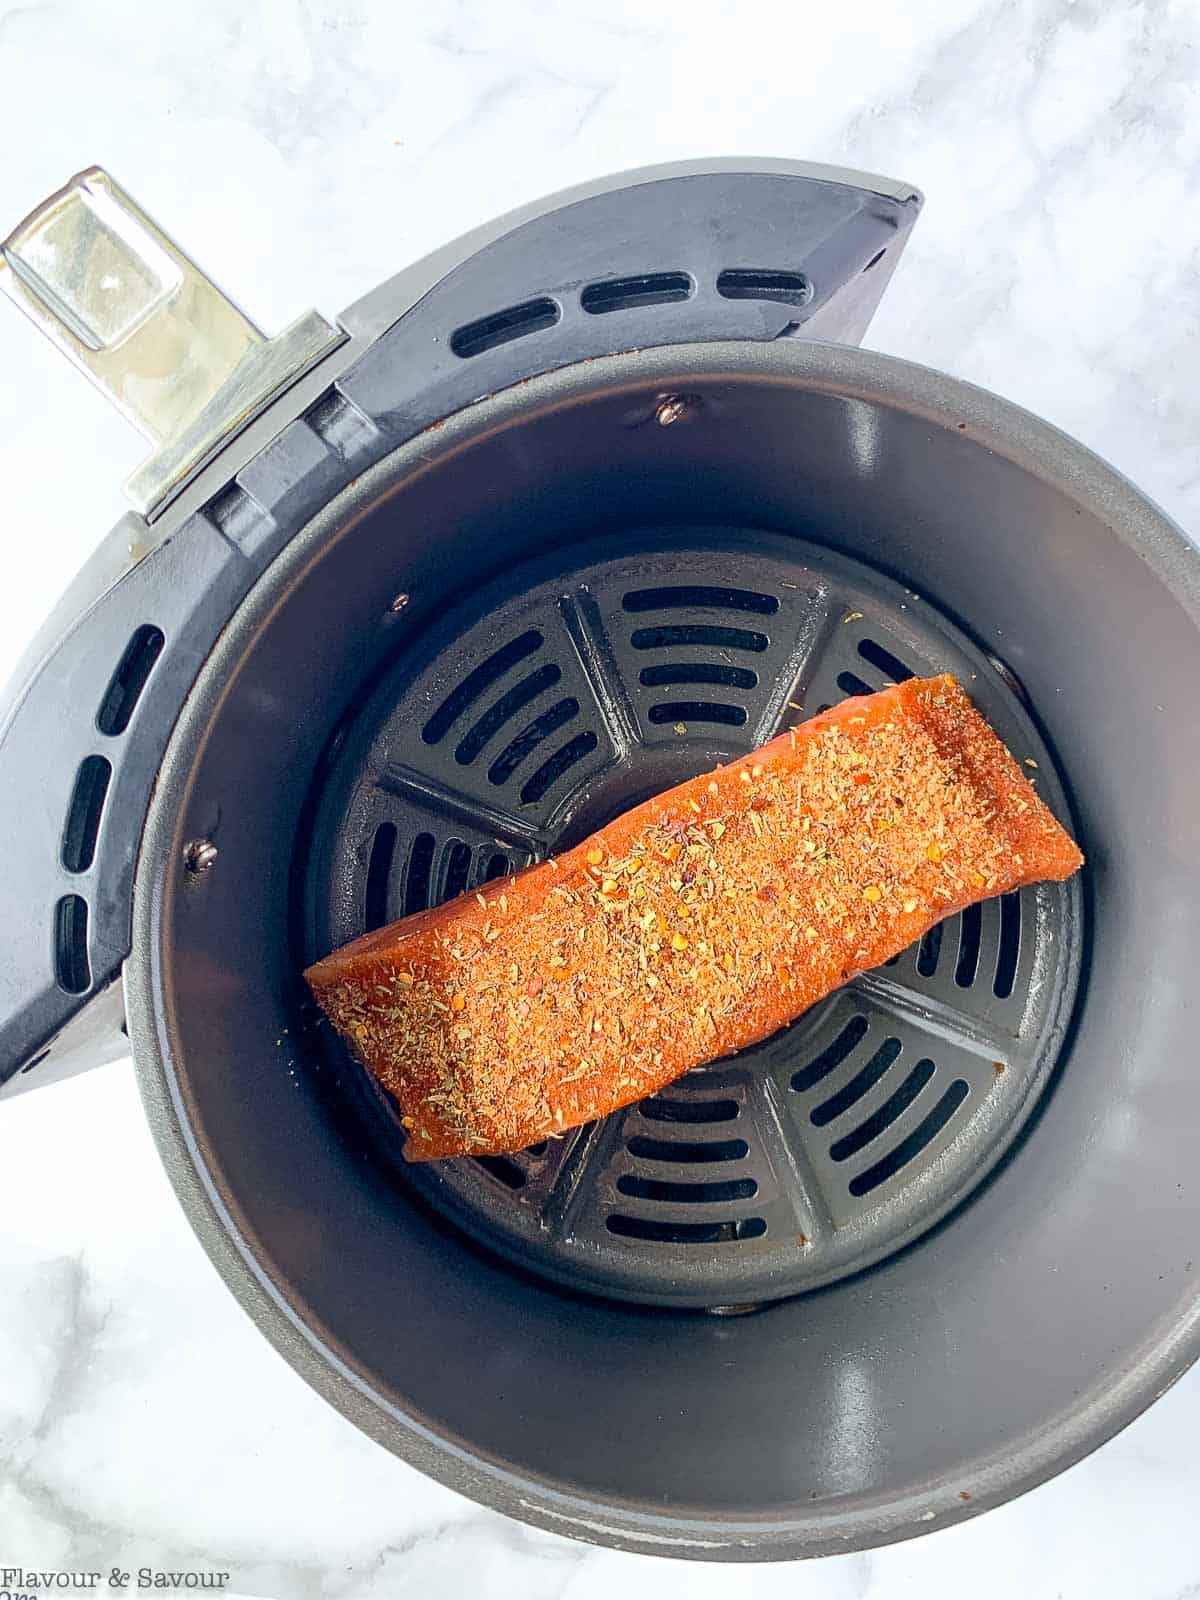 A salmon fillet in an air fryer basket.